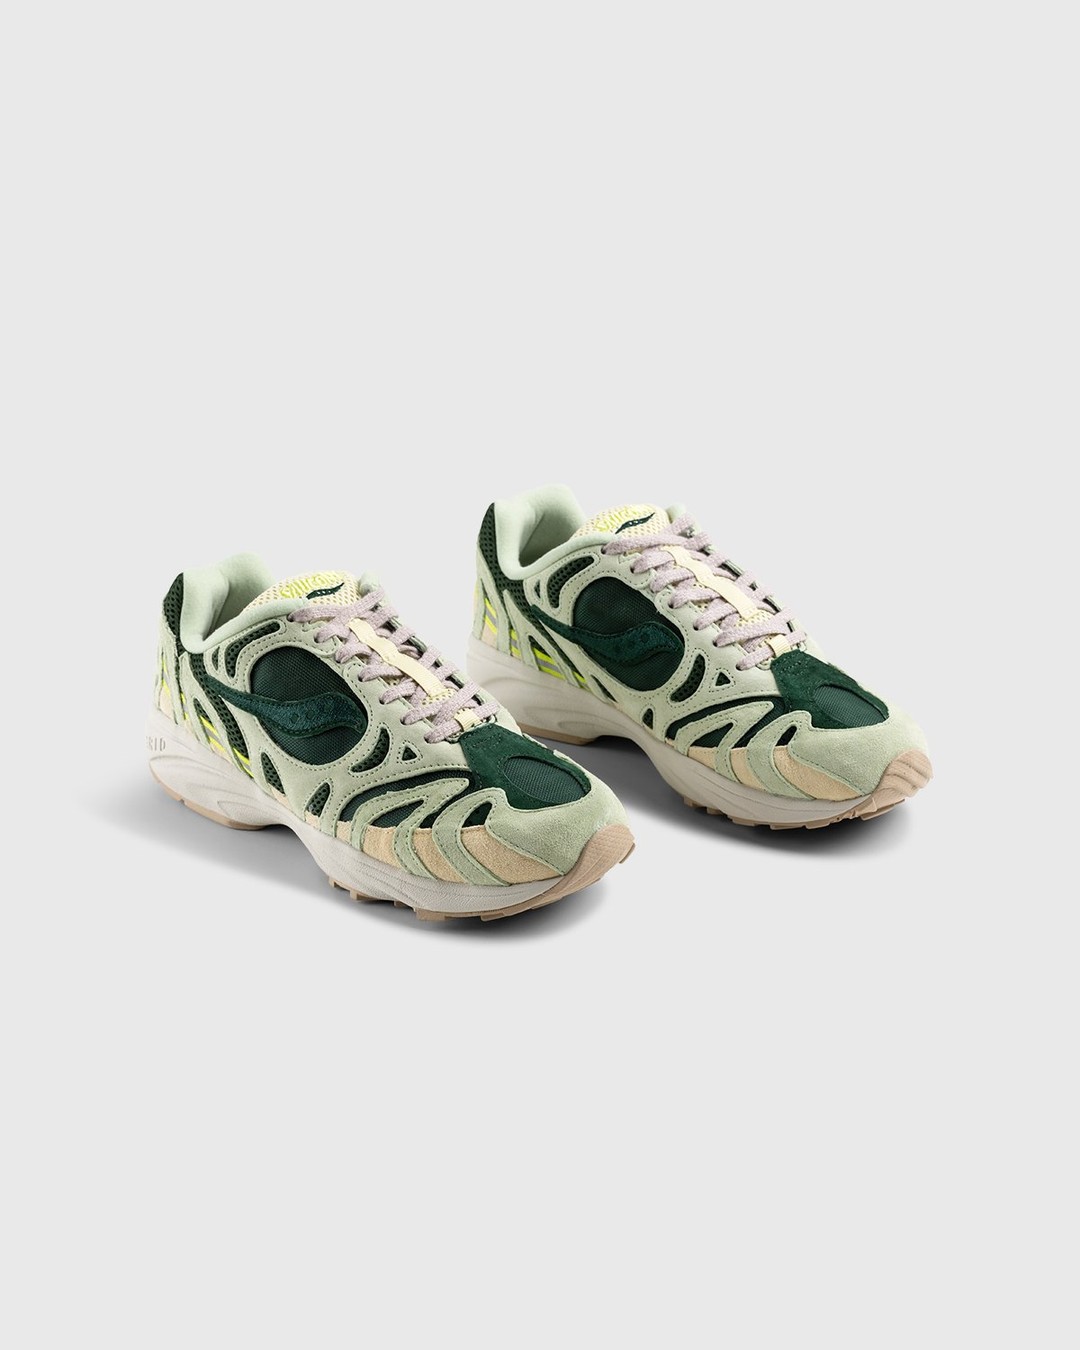 Saucony – Grid Azura 2000 Green - Sneakers - Green - Image 4